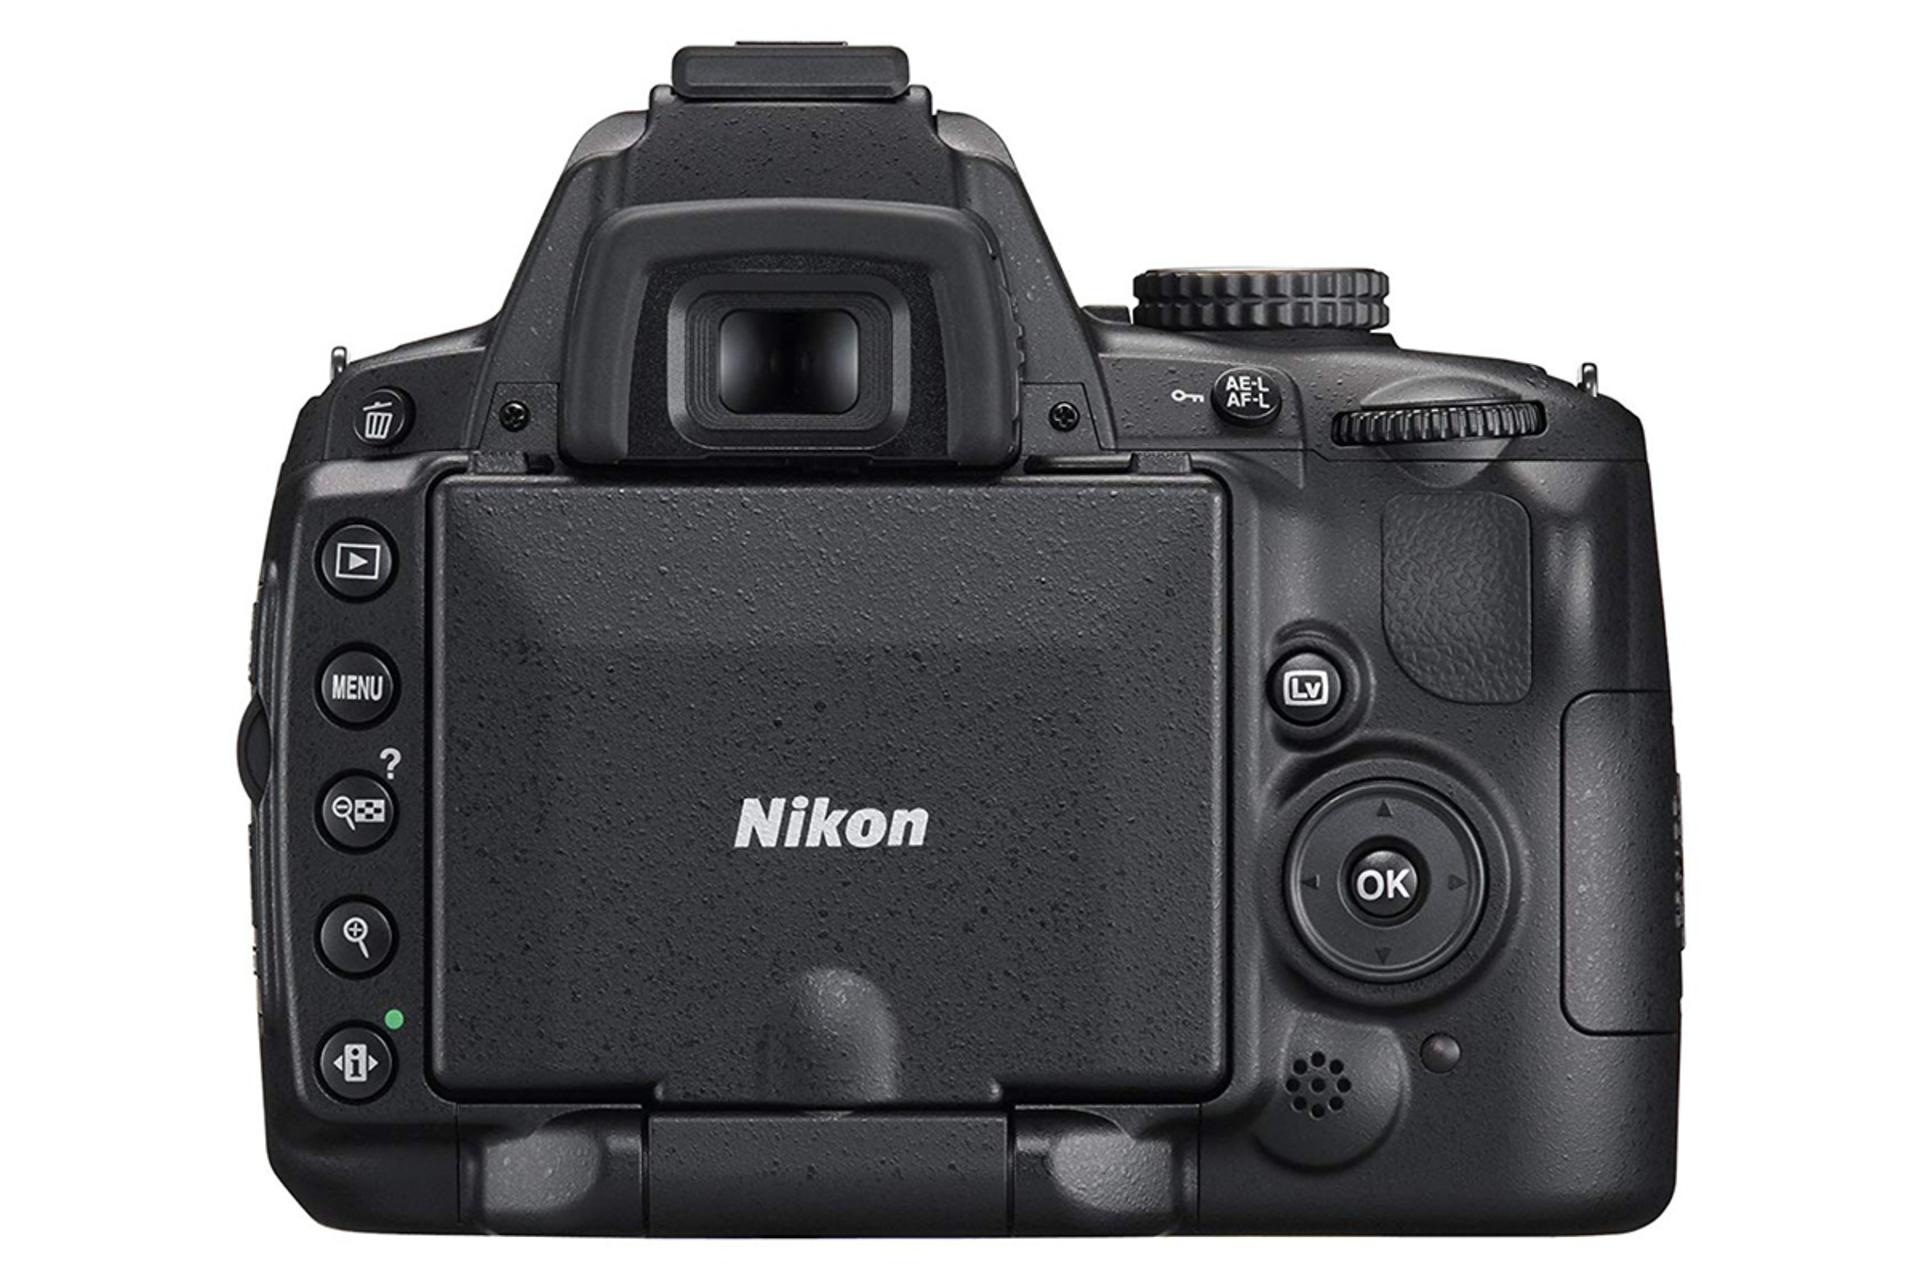 Nikon D5000 / نیکون